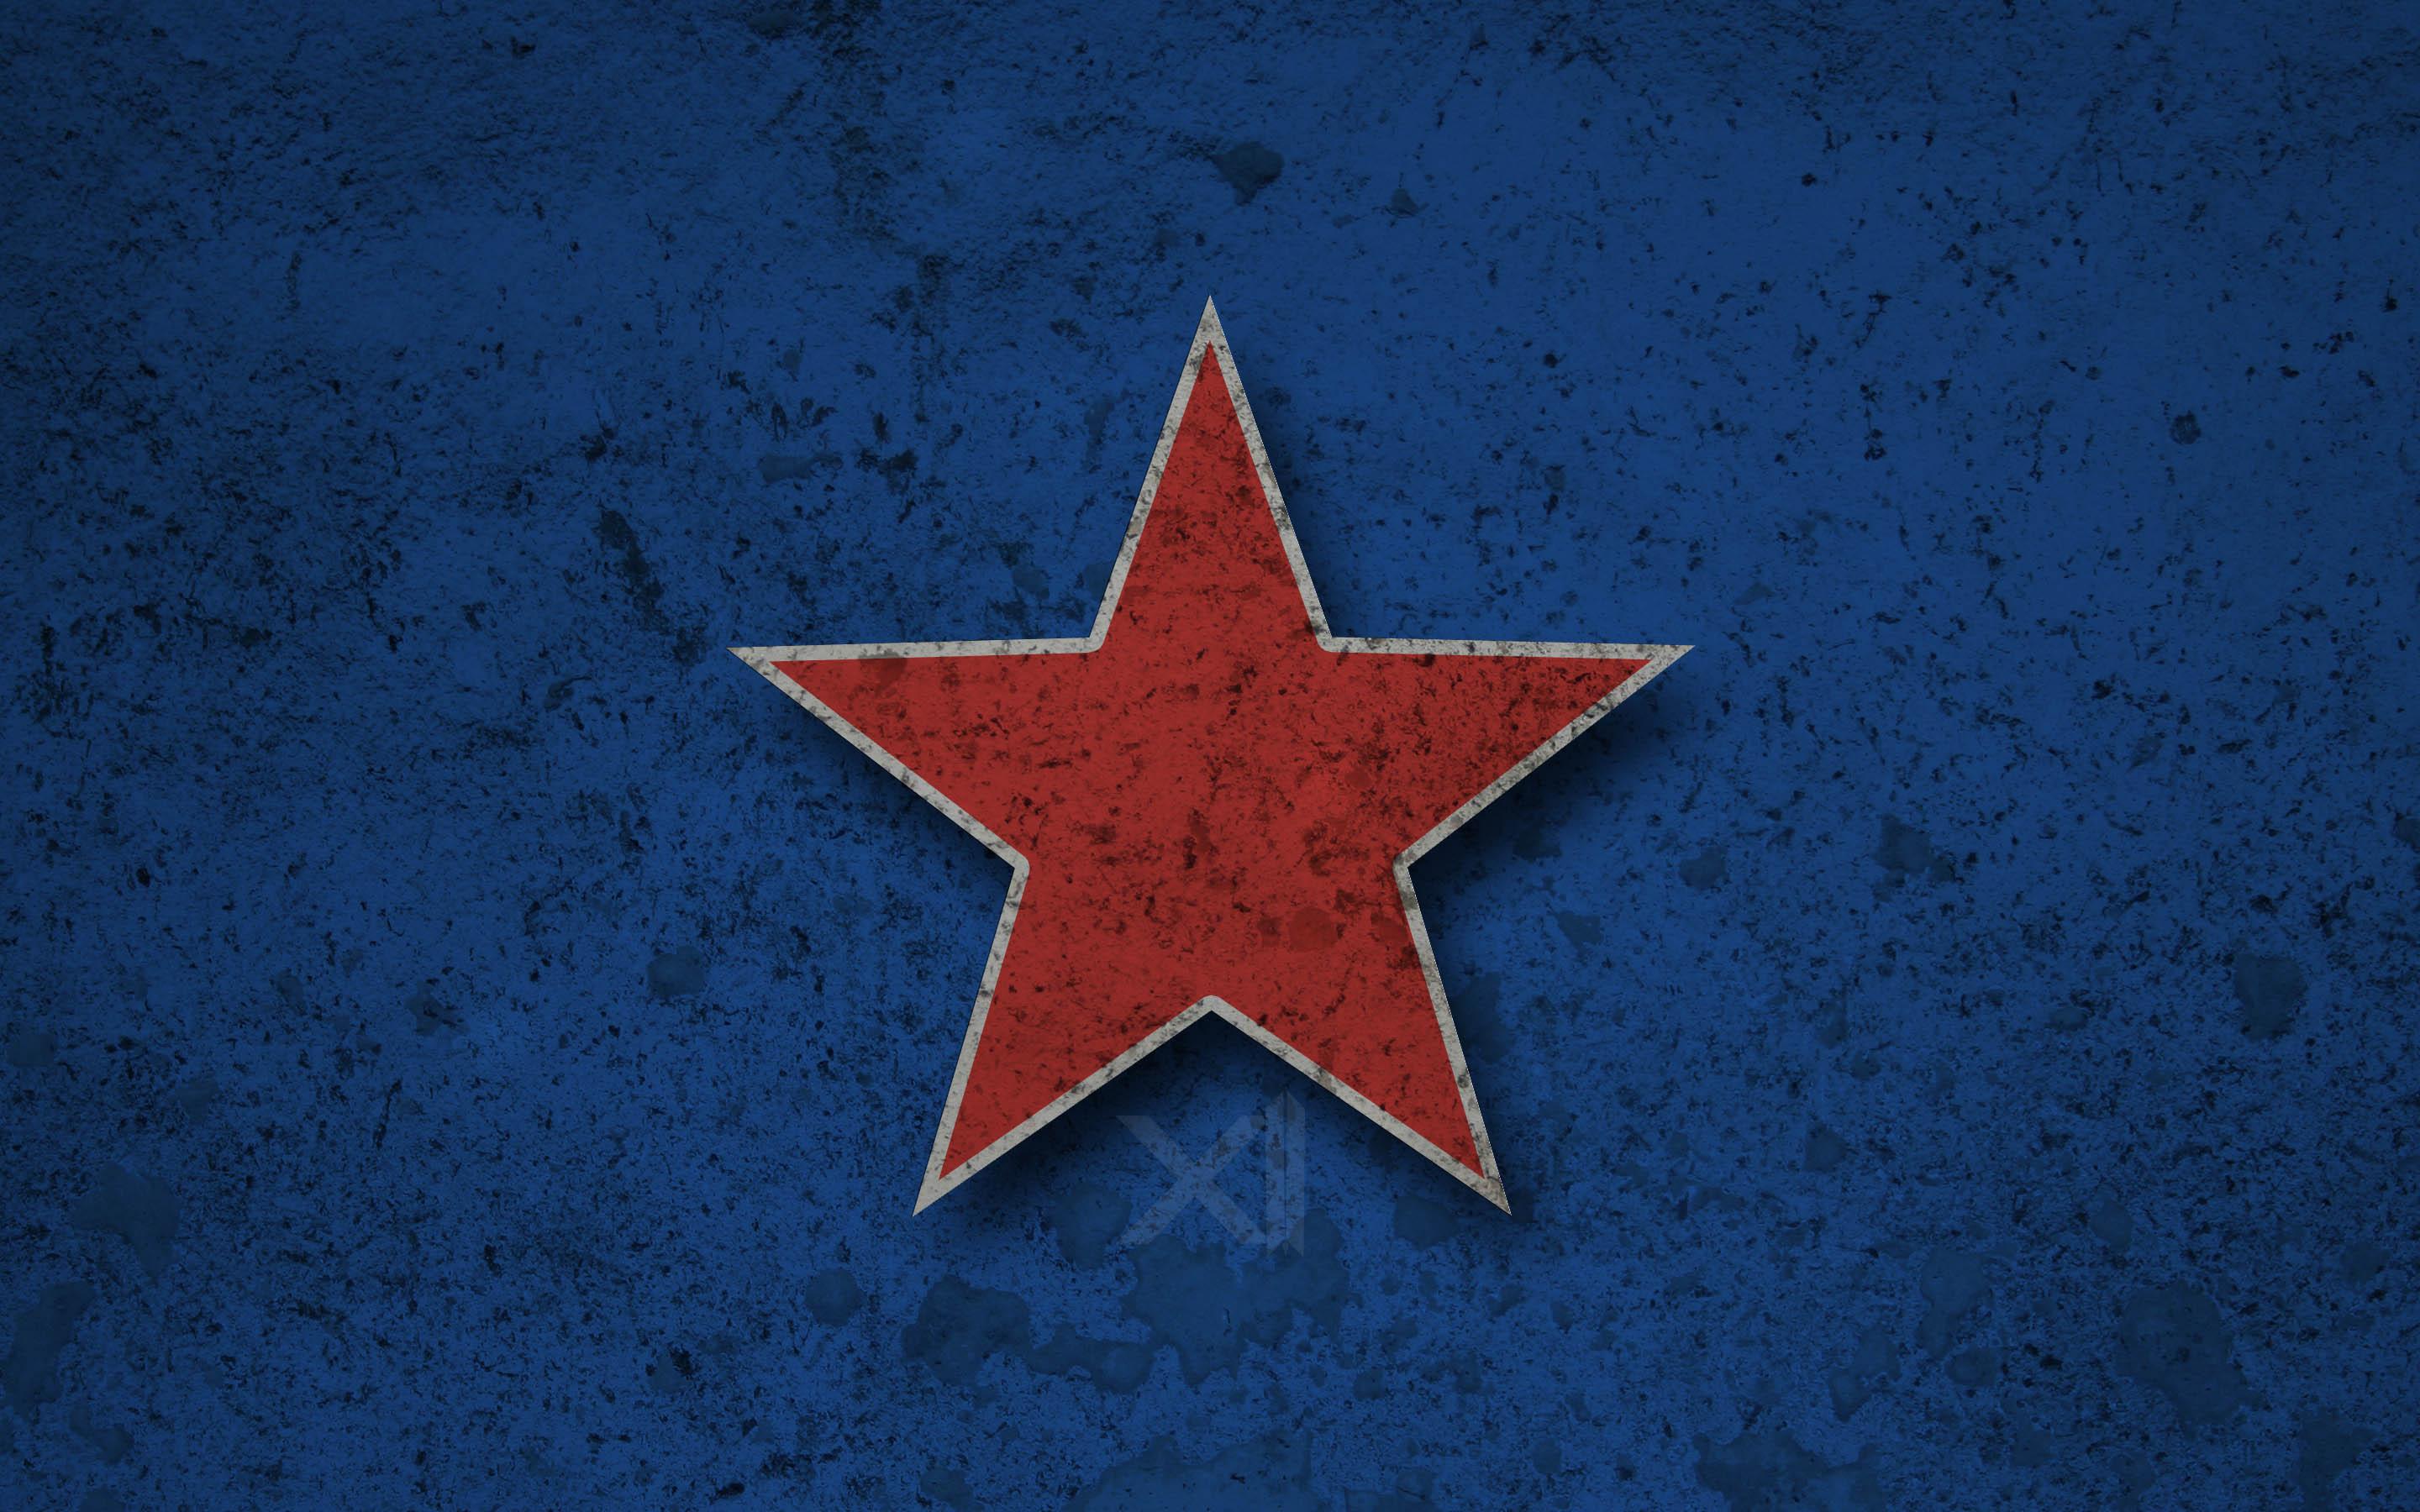 Red Star HD Wallpaper